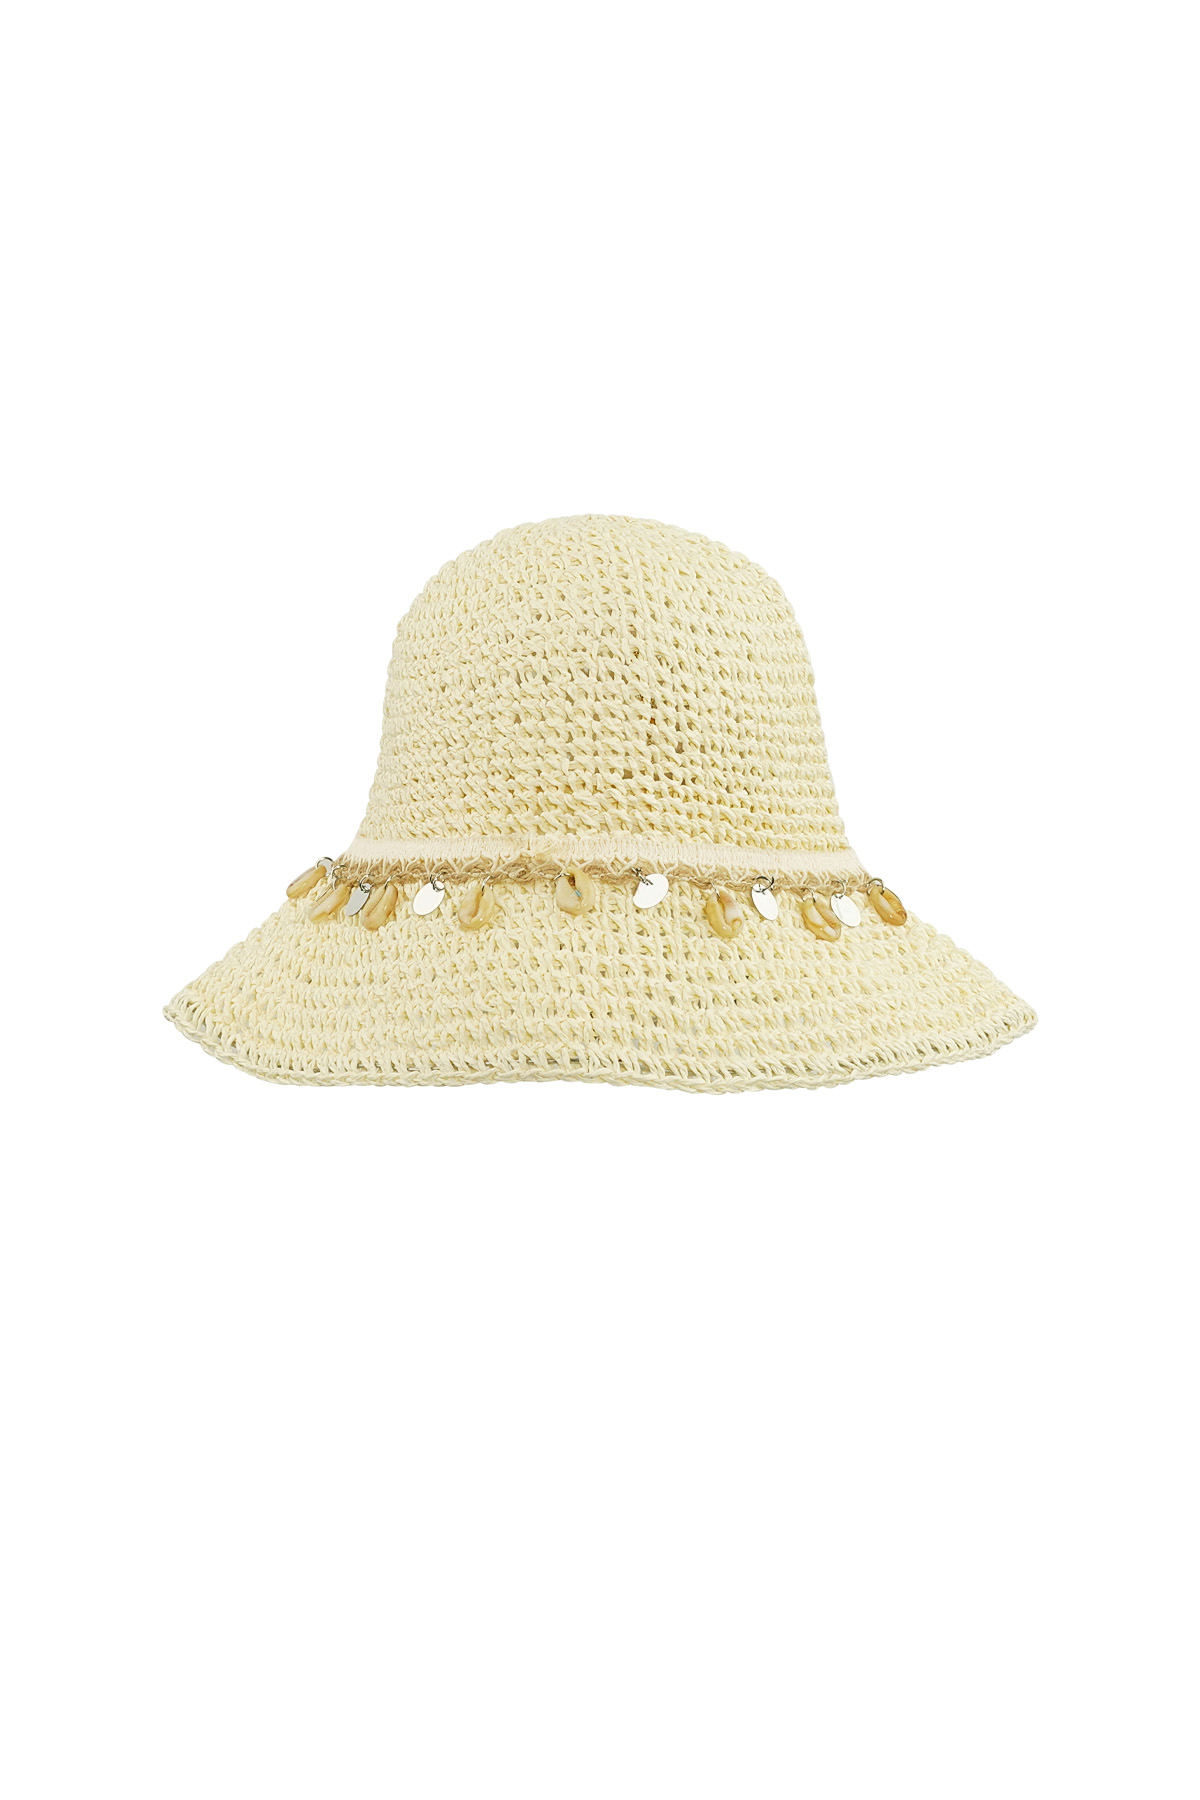 Beach hat with shells - beige h5 